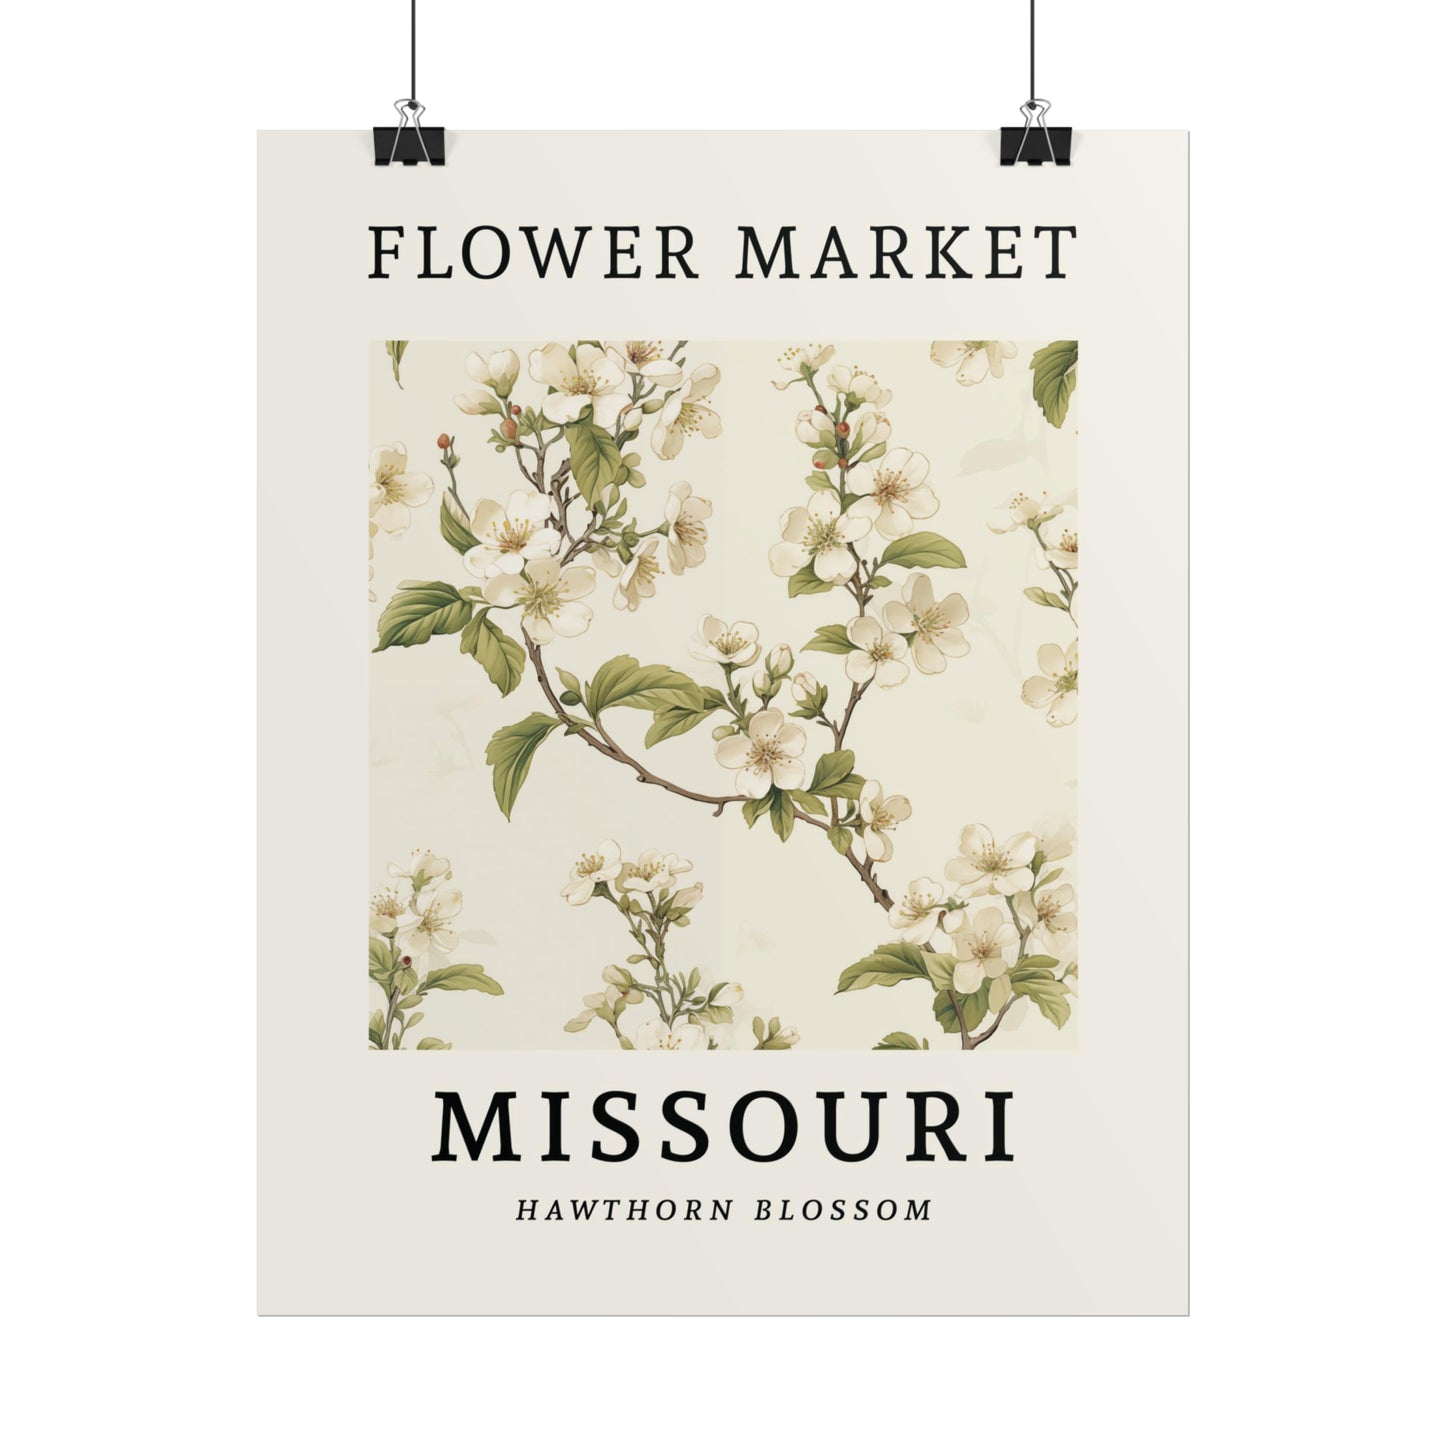 MISSOURI FLOWER MARKET Poster White Hawthorn Blossom Print